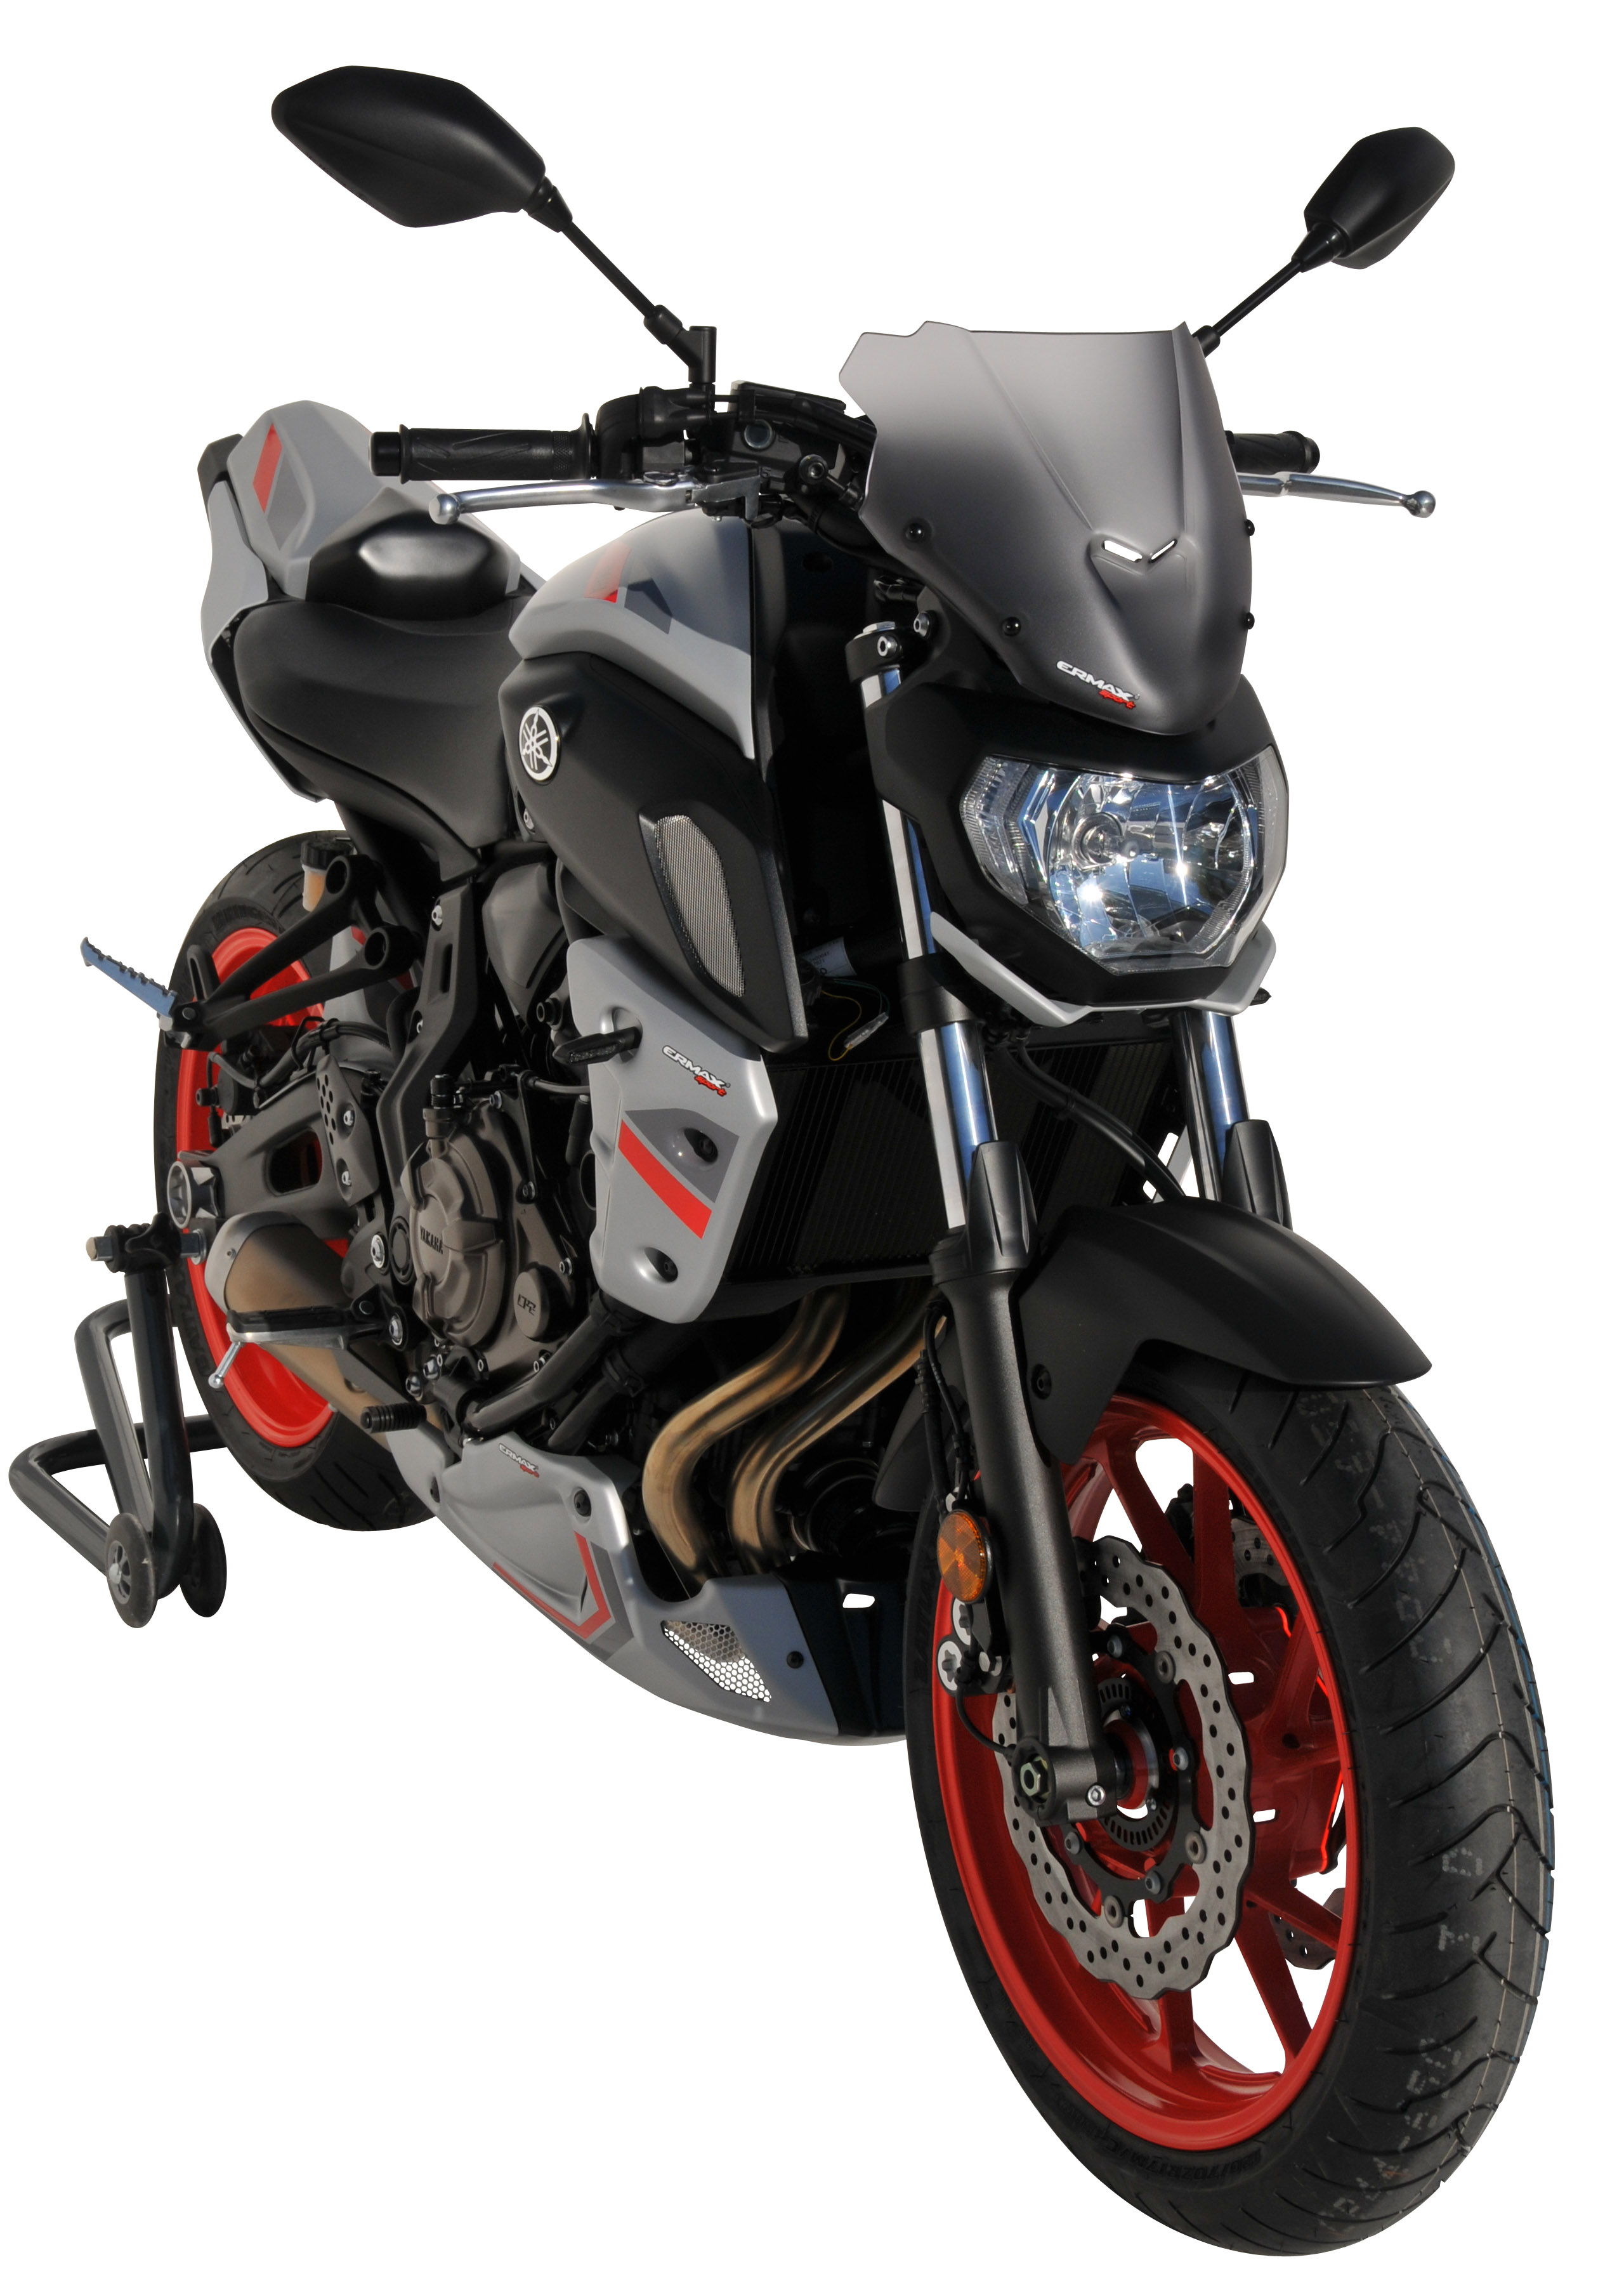 Yamaha MT-07 ABS: Details Explained - BikeWale